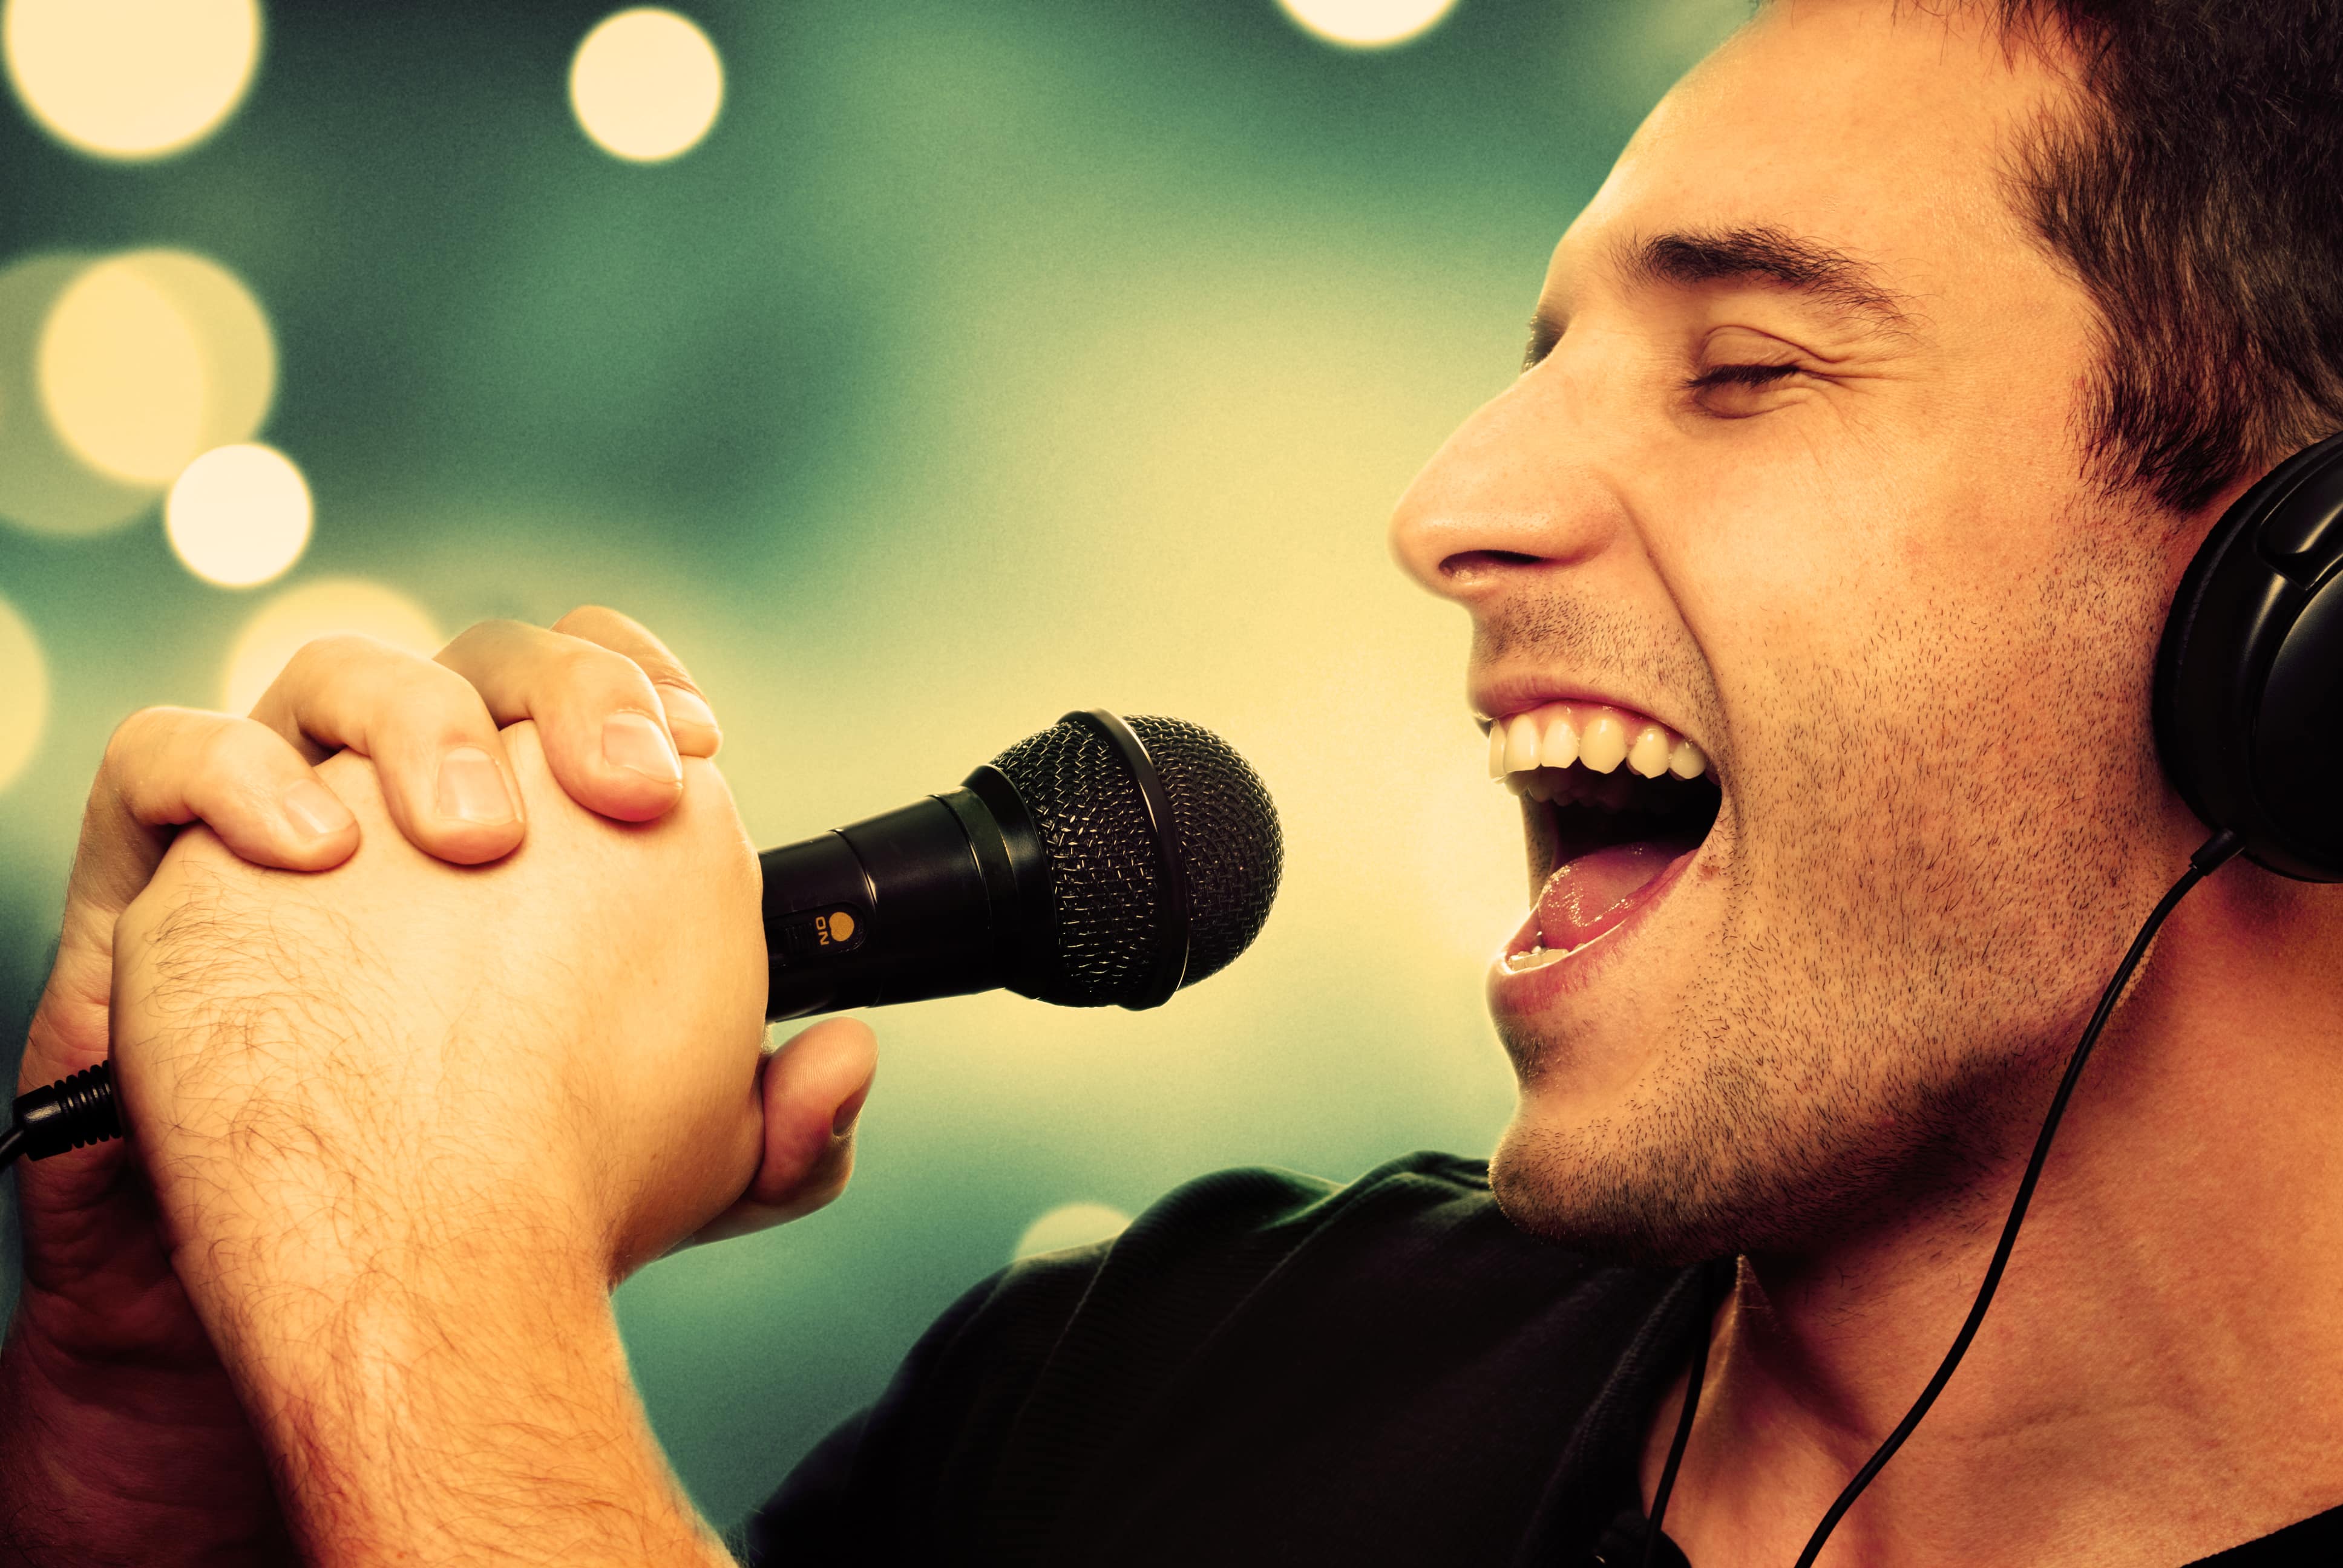 Retro image of man singing into microphone